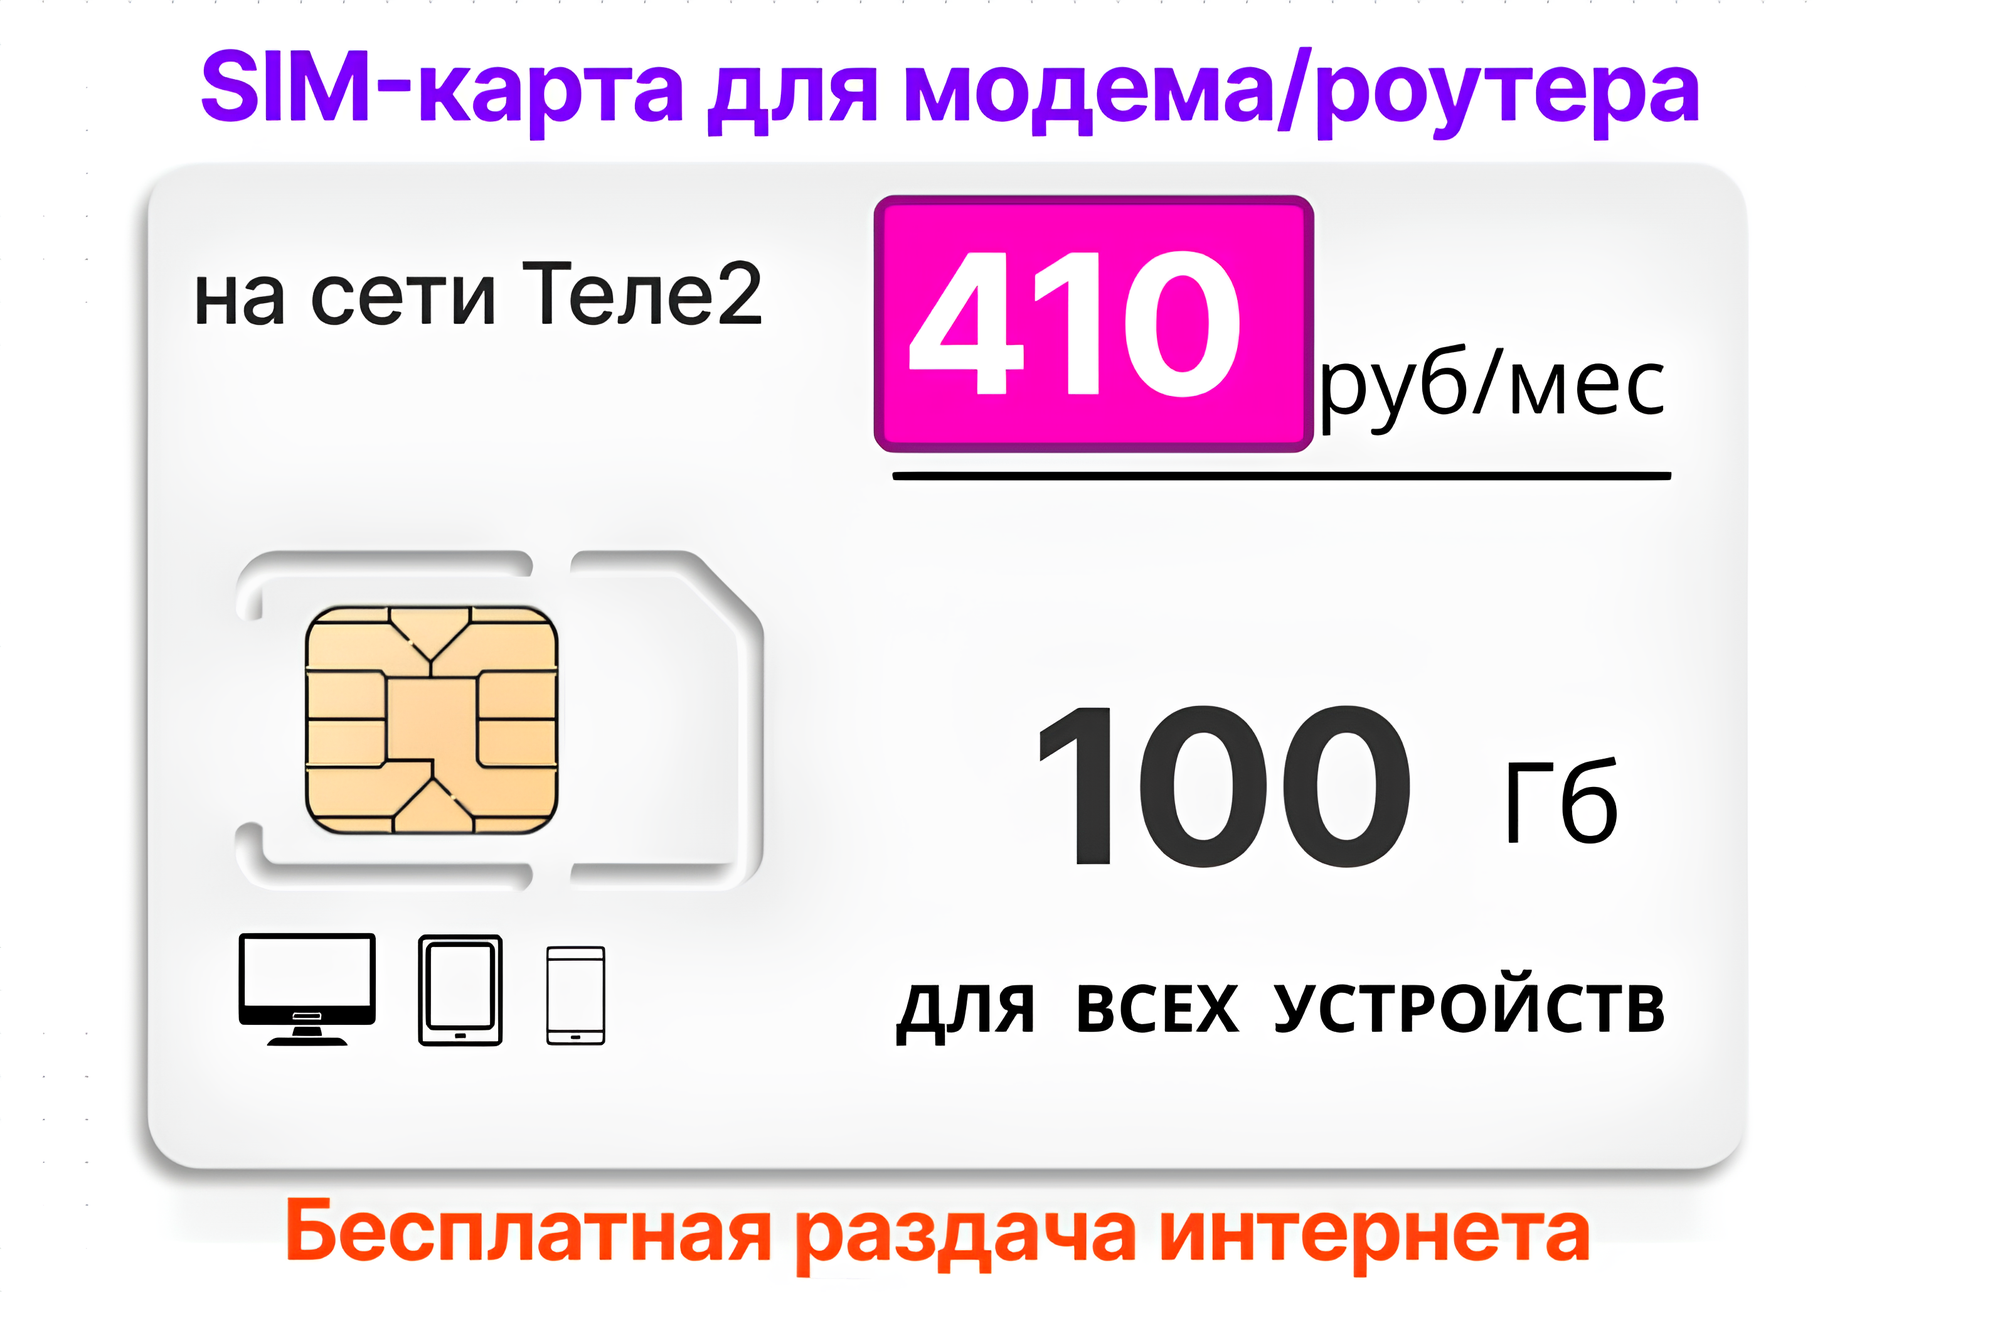 SIM-карта Ростелеком для модема/роутера 100Gb за 410руб/мес